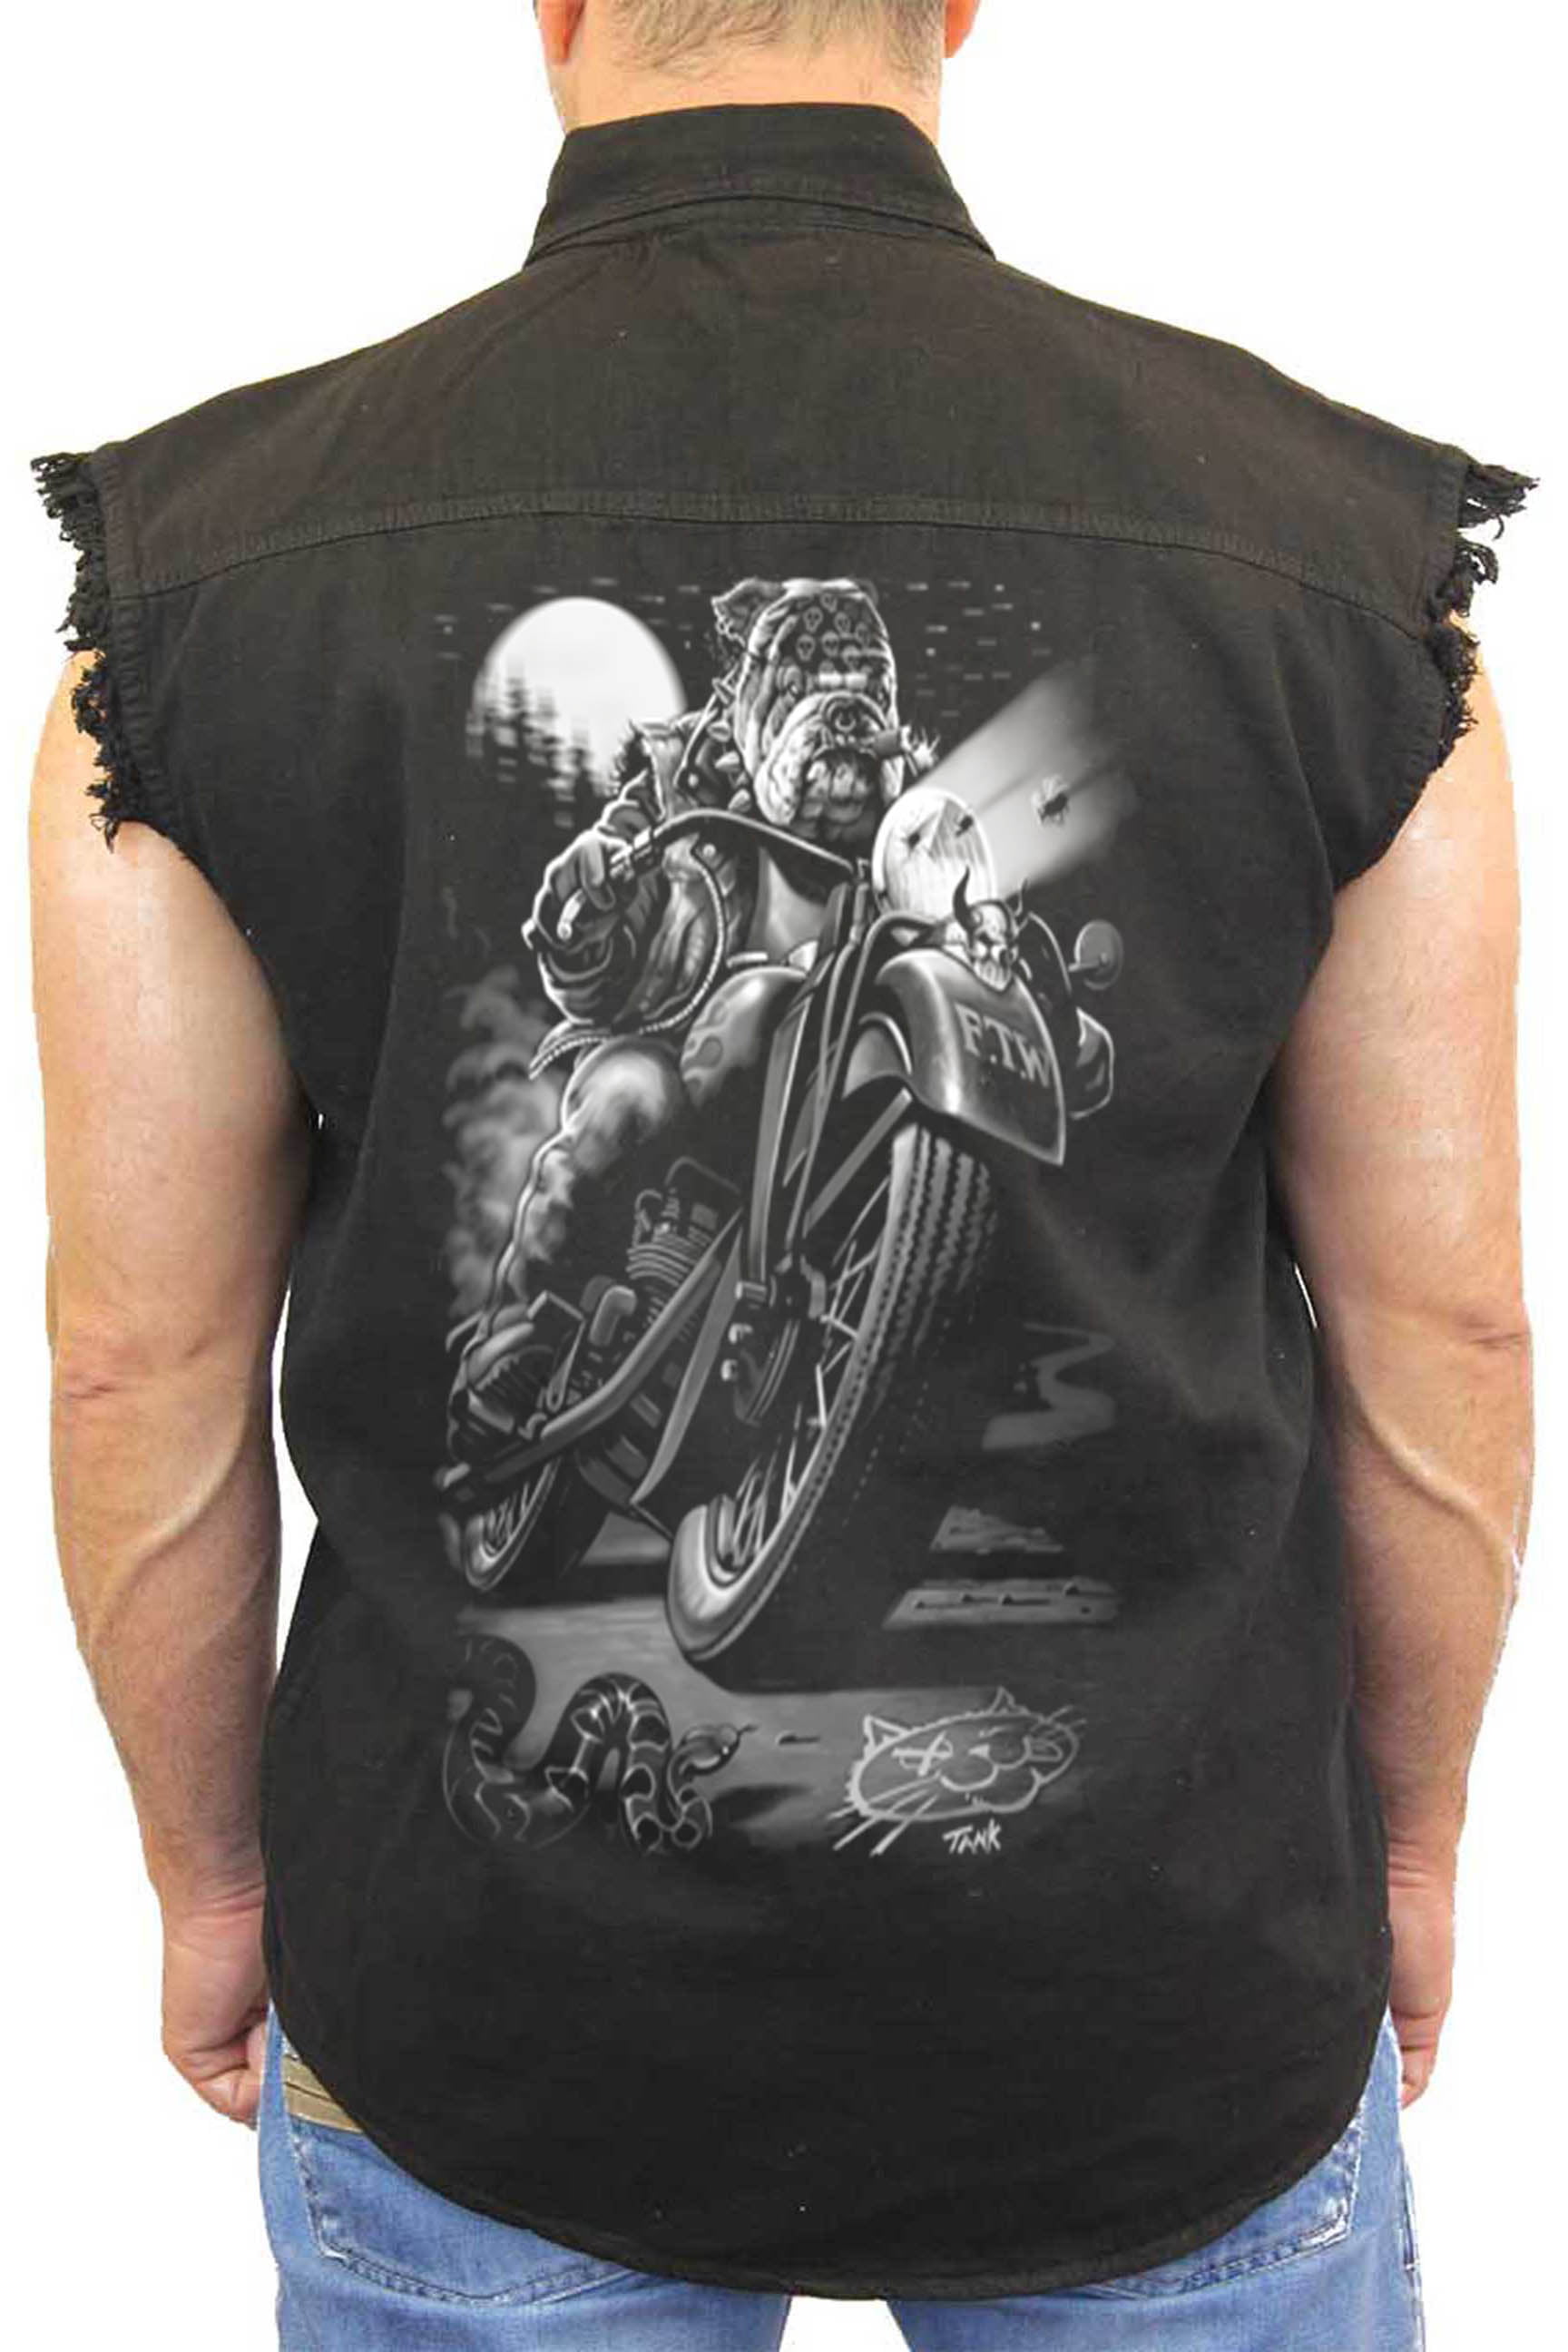 AFFLICTION Men's T-shirt COUNTER STRIKE  Gray/Black Motorcycle Biker S-4XL